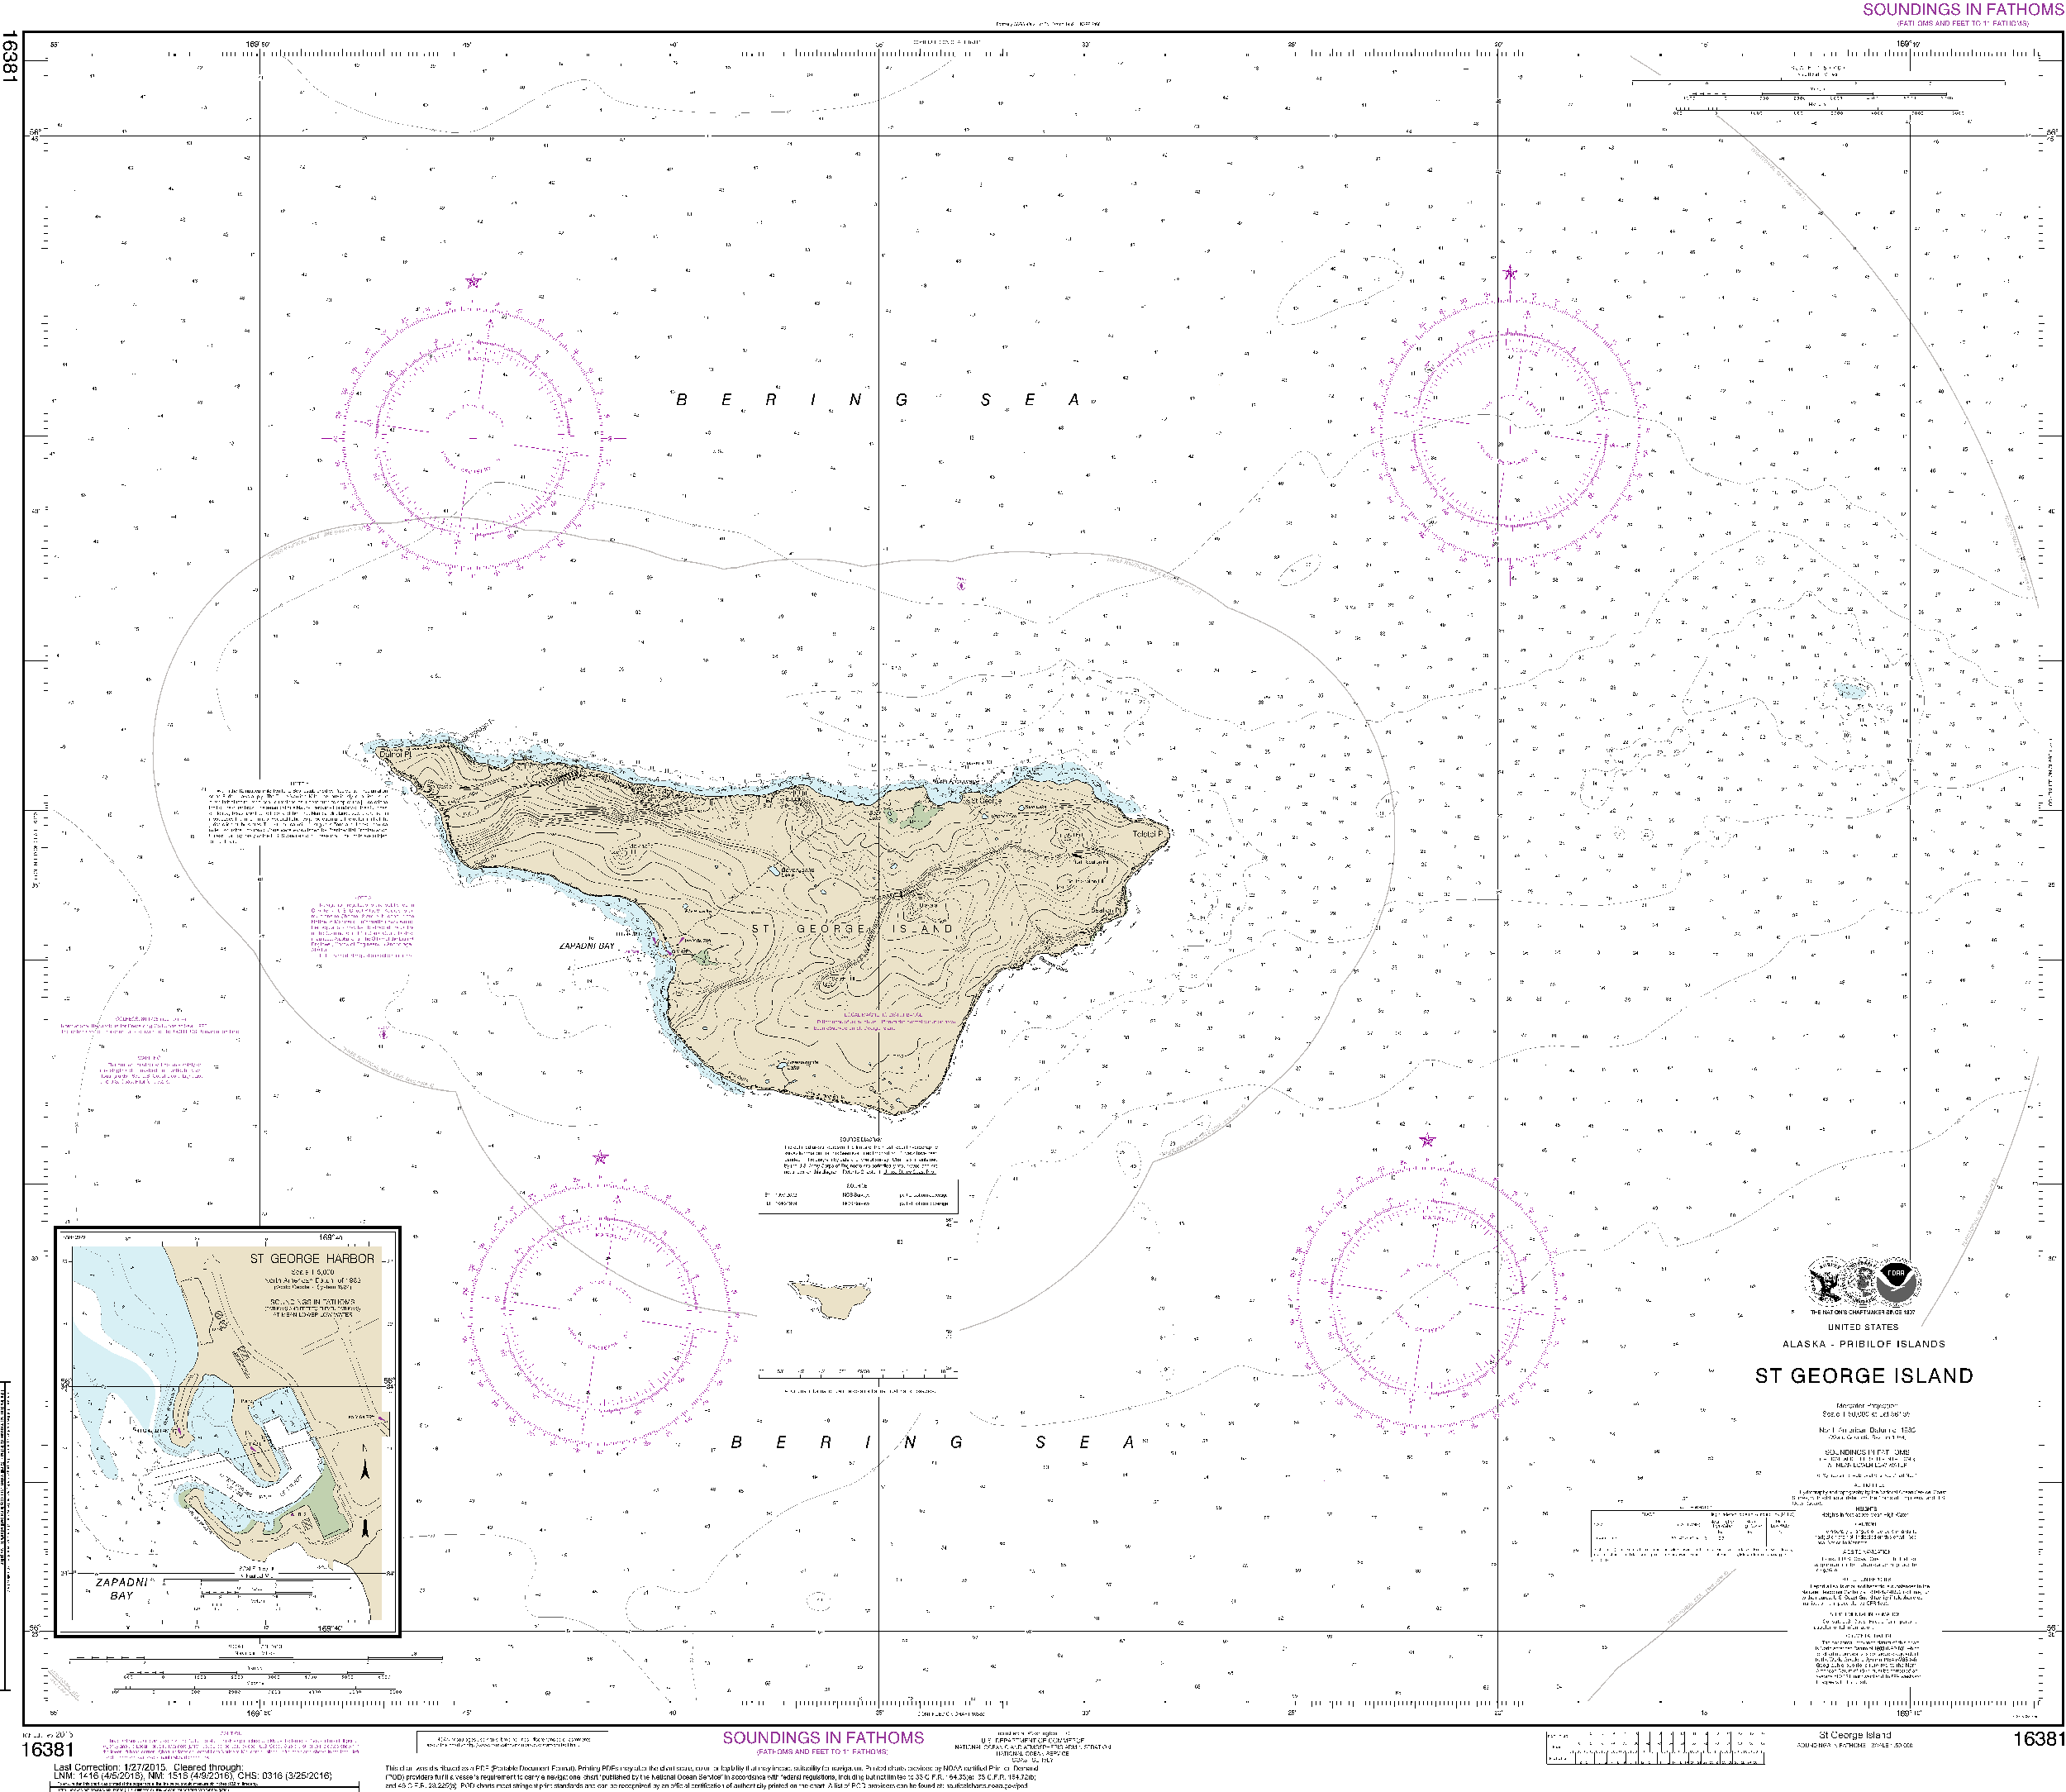 NOAA Nautical Chart 16381: St. George Island, Pribilof Islands